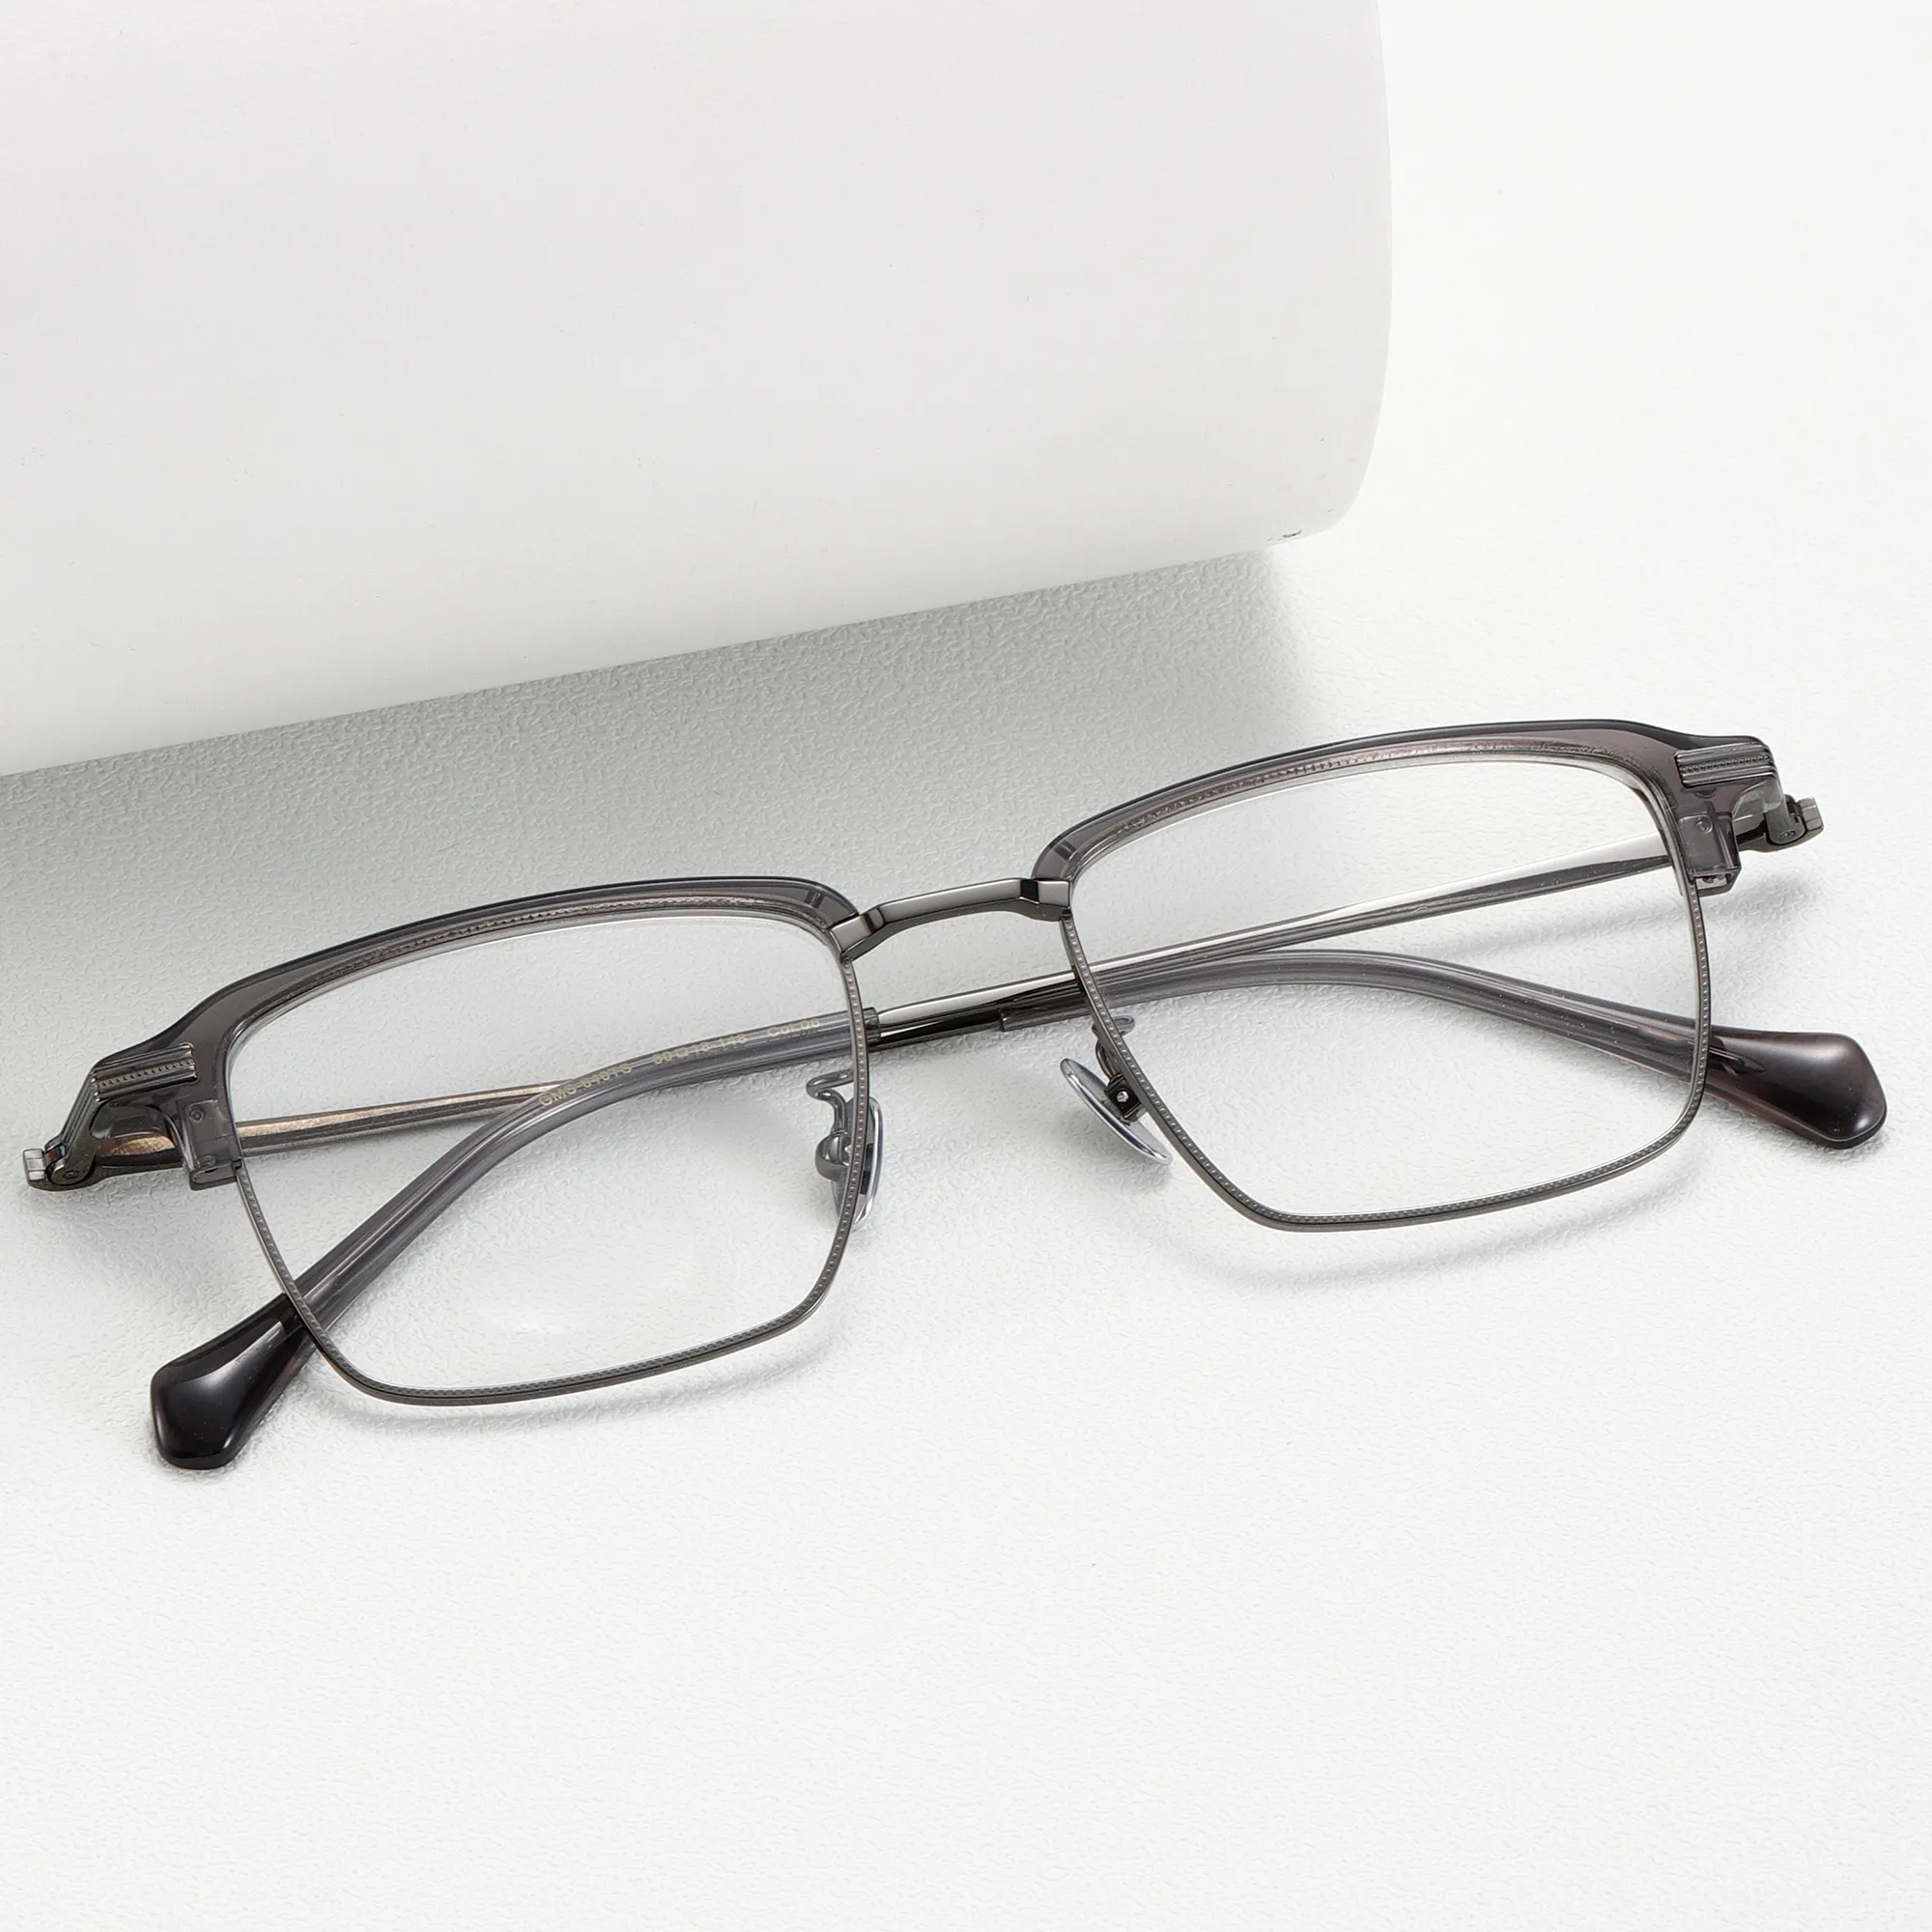 Figroad Luxus Anti-Blaulicht Halbrahmen-Brille Titan-Material OEM Optikdesign Erwachsene Herren Mode Brillenrahmen